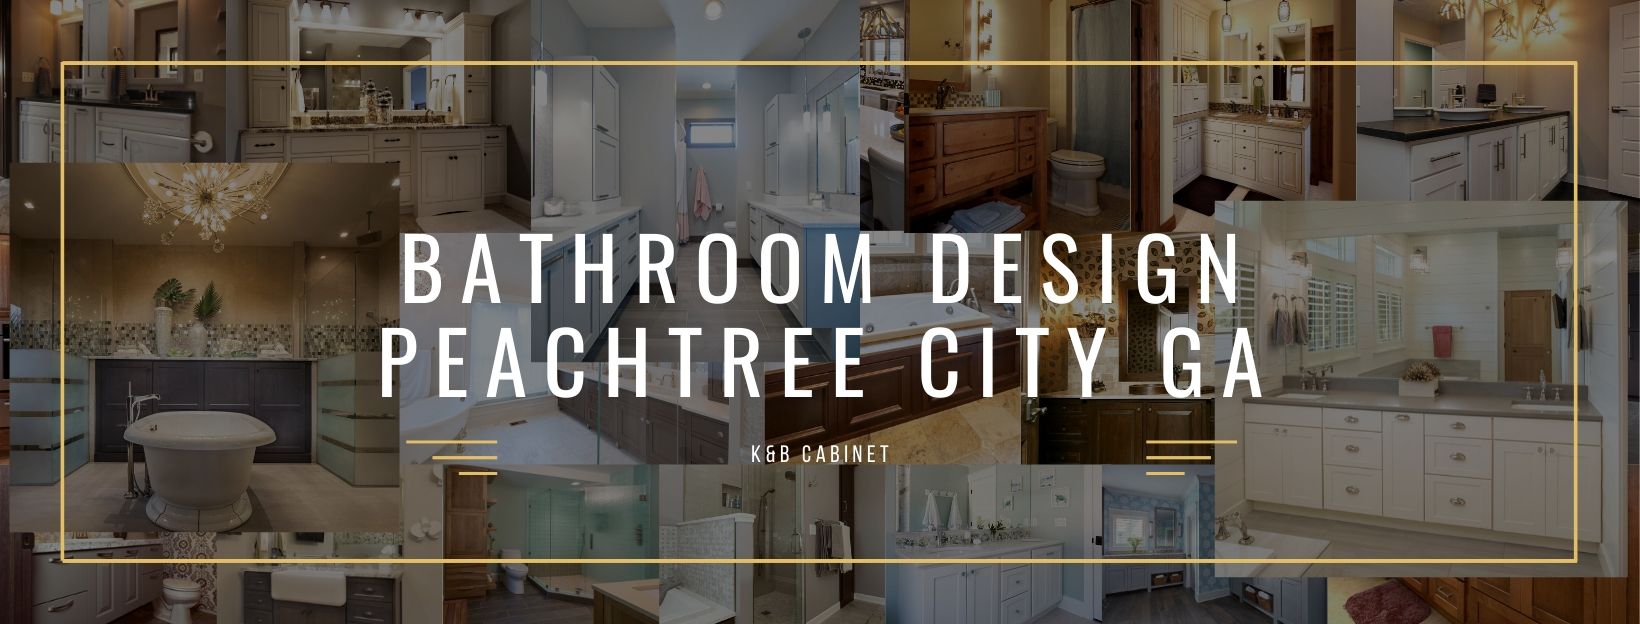 Bathroom Design Peachtree City GA